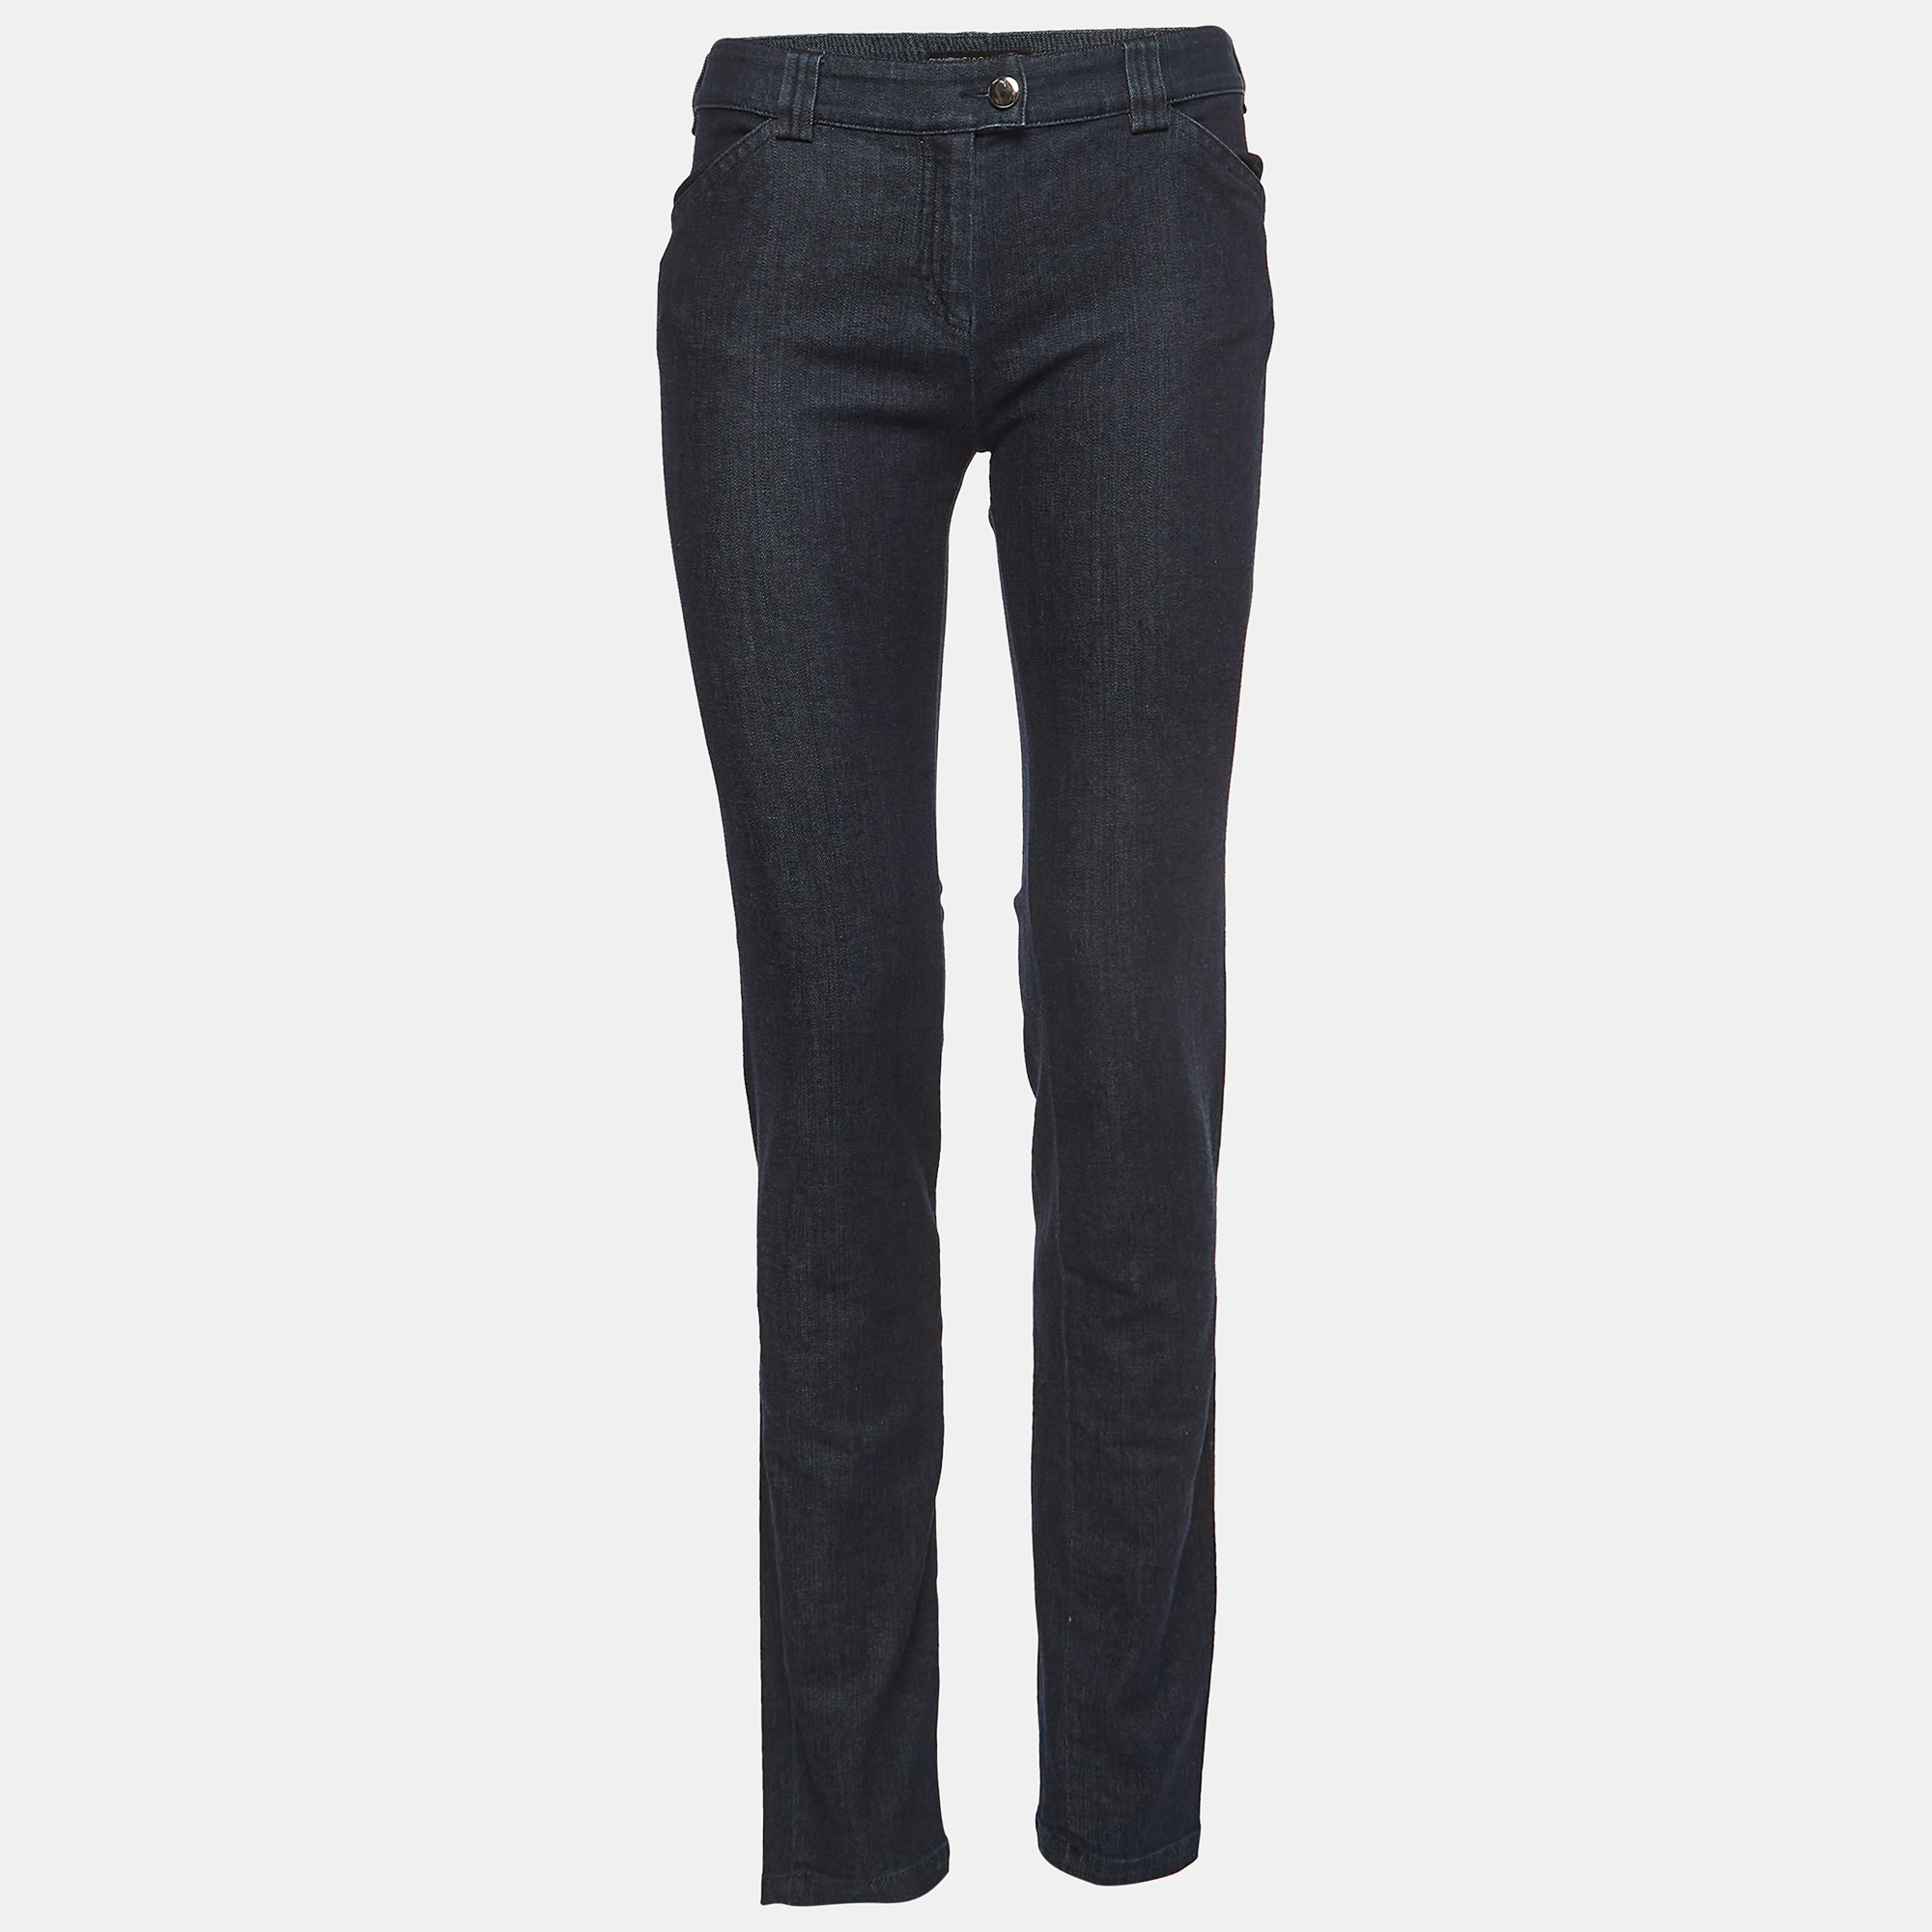 Balenciaga navy blue denim slim fit jeans m waist 32''